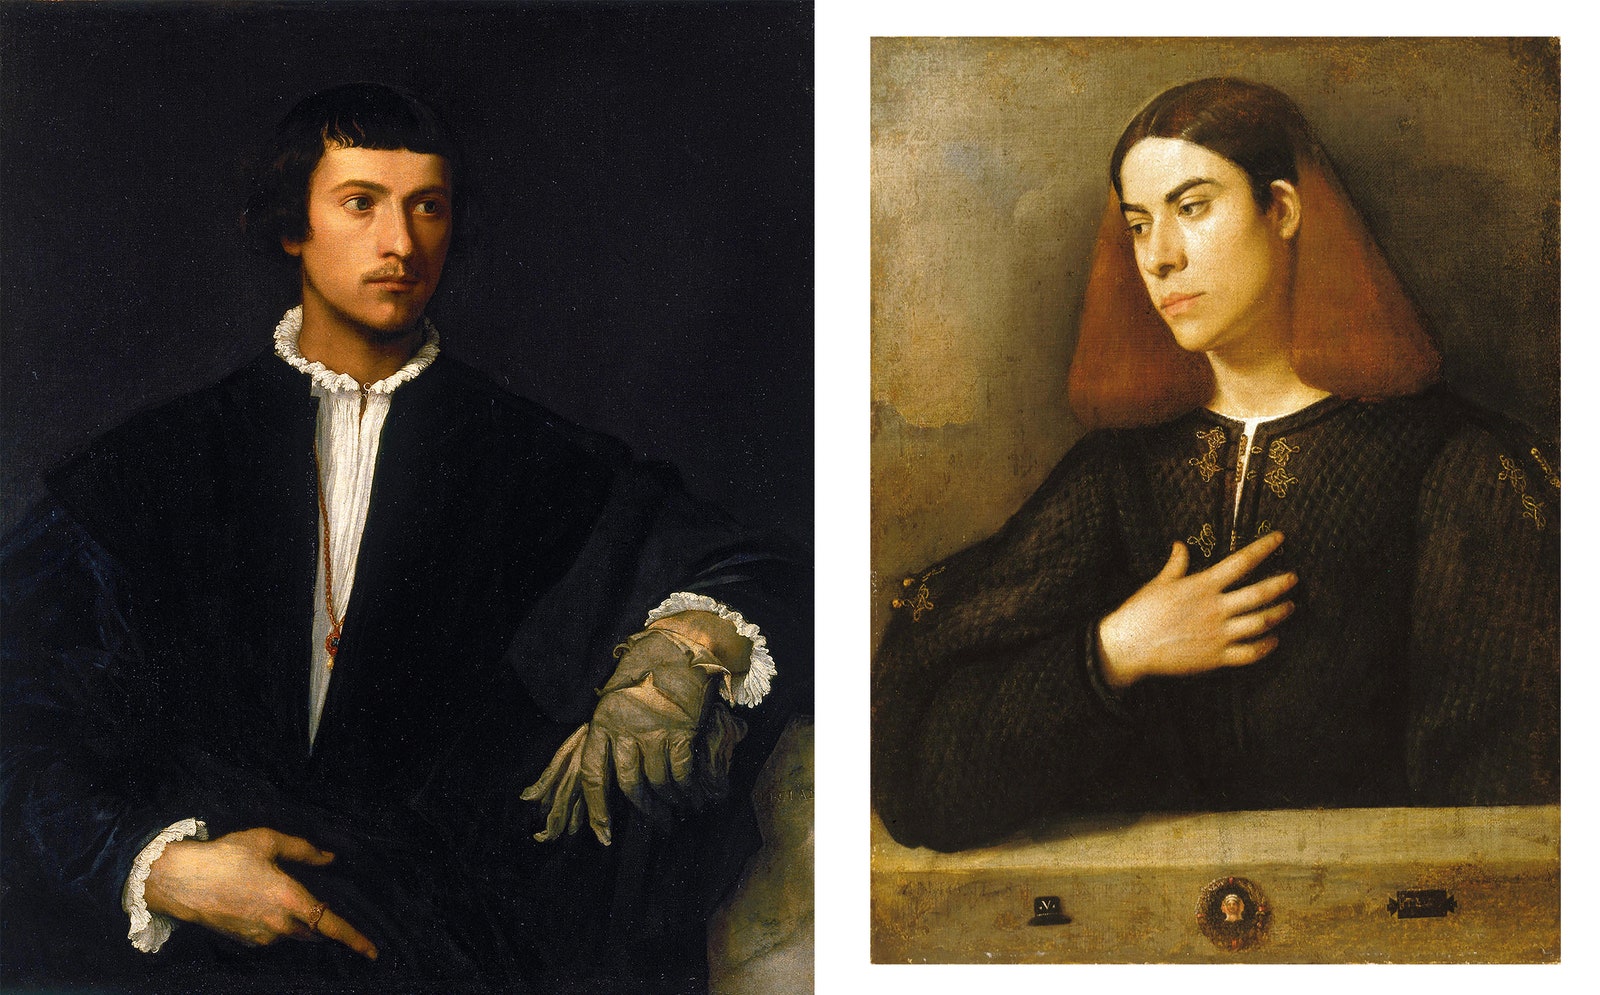 Тициан «Мужчина с перчаткой» ок. 1520 Джорджоне «Портрет молодого человека» ок. 1510